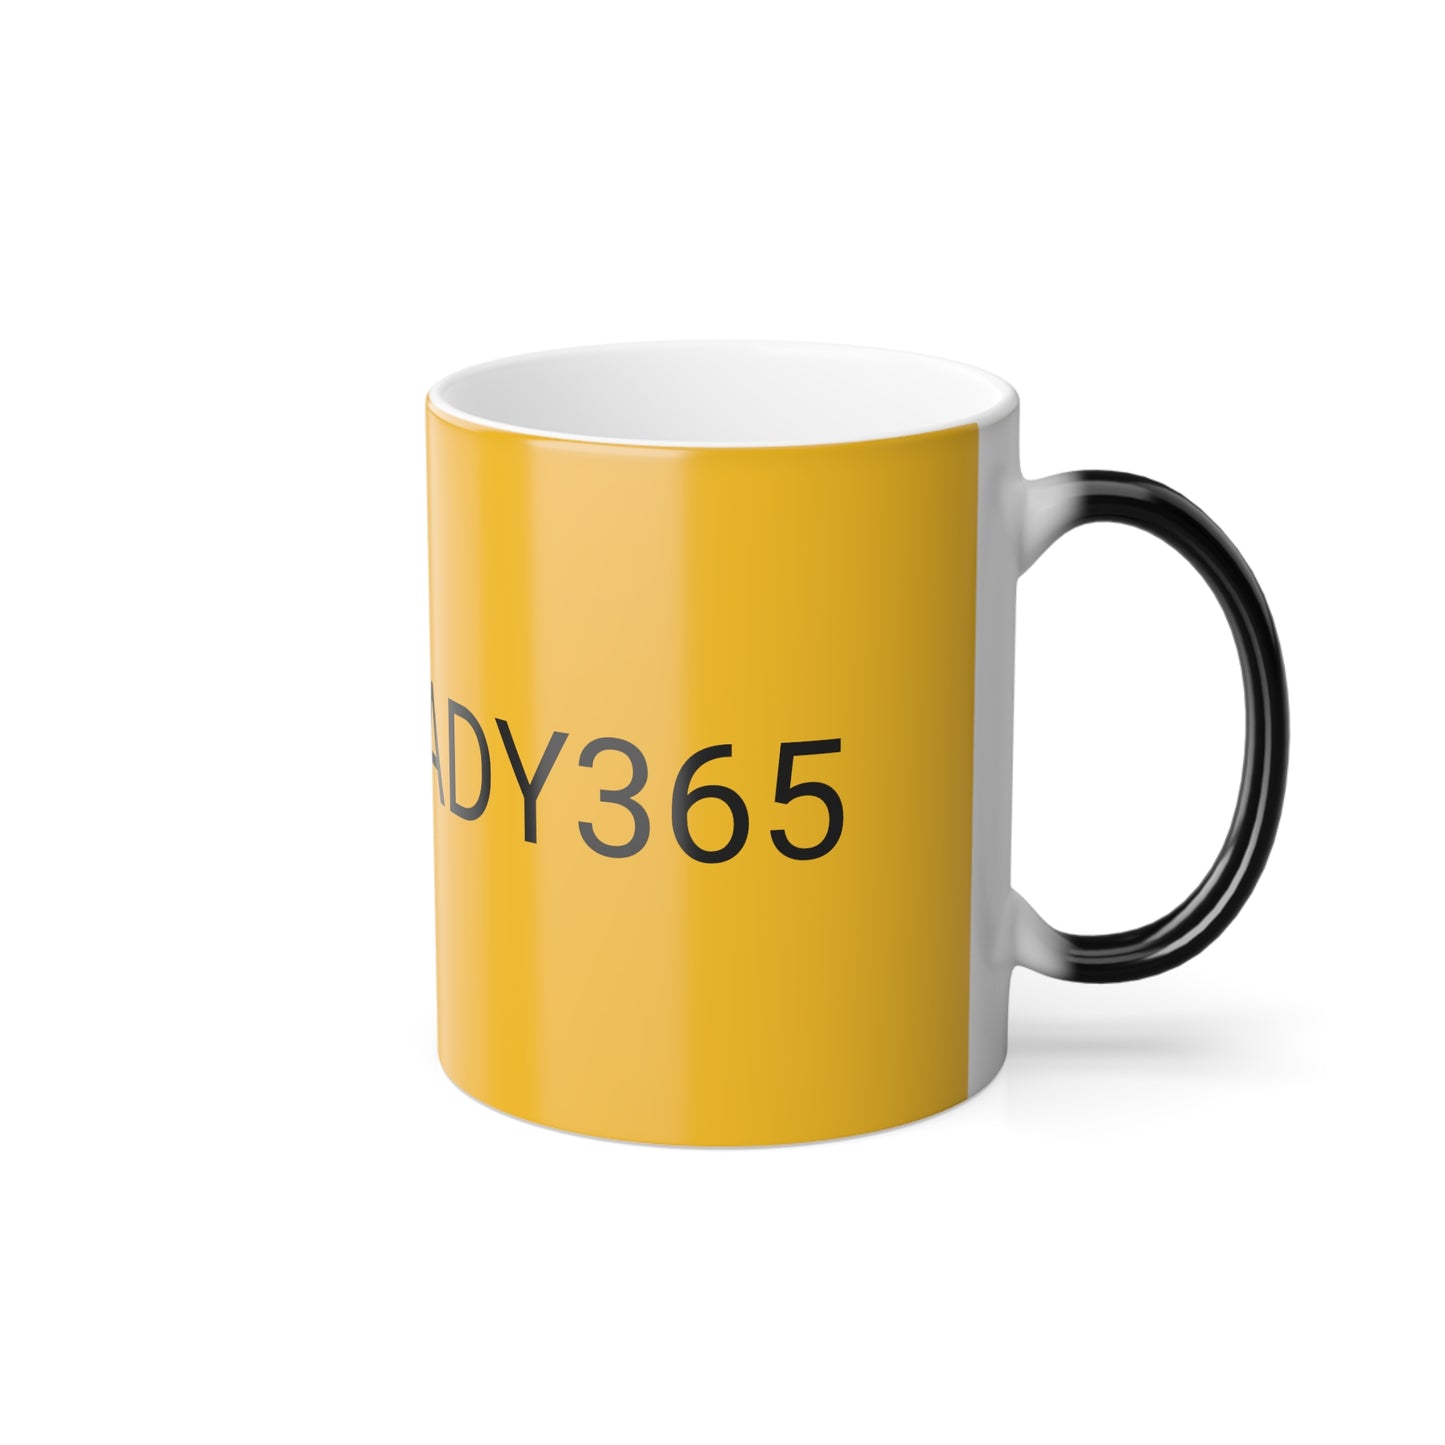 BOSS LADY 365 Color Morphing Mug, 11oz